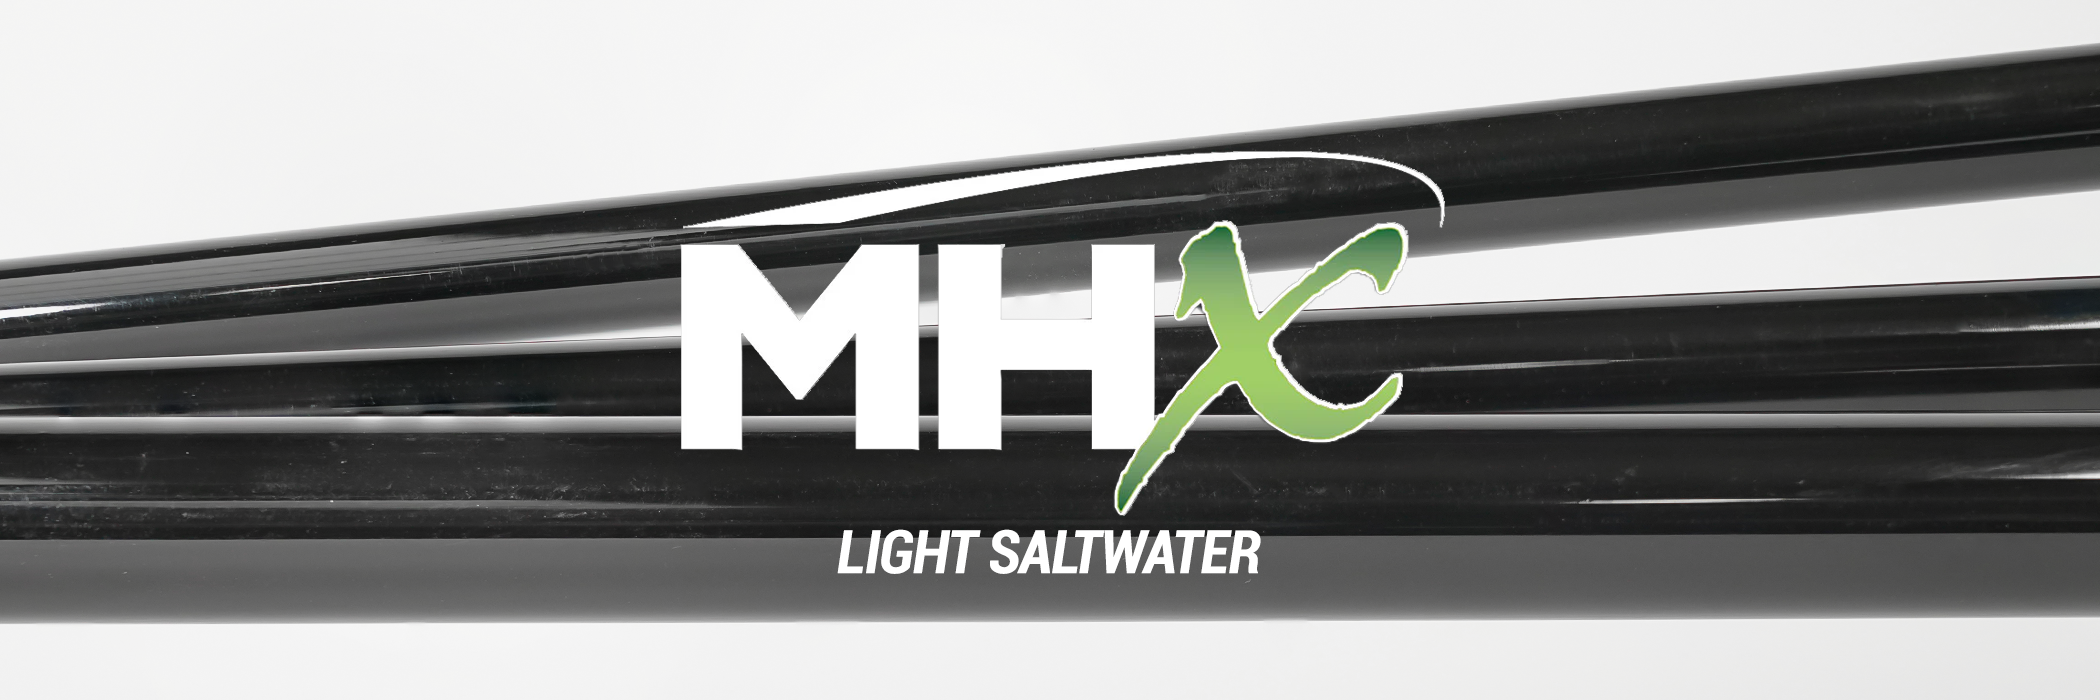 MHX - Light Saltwater